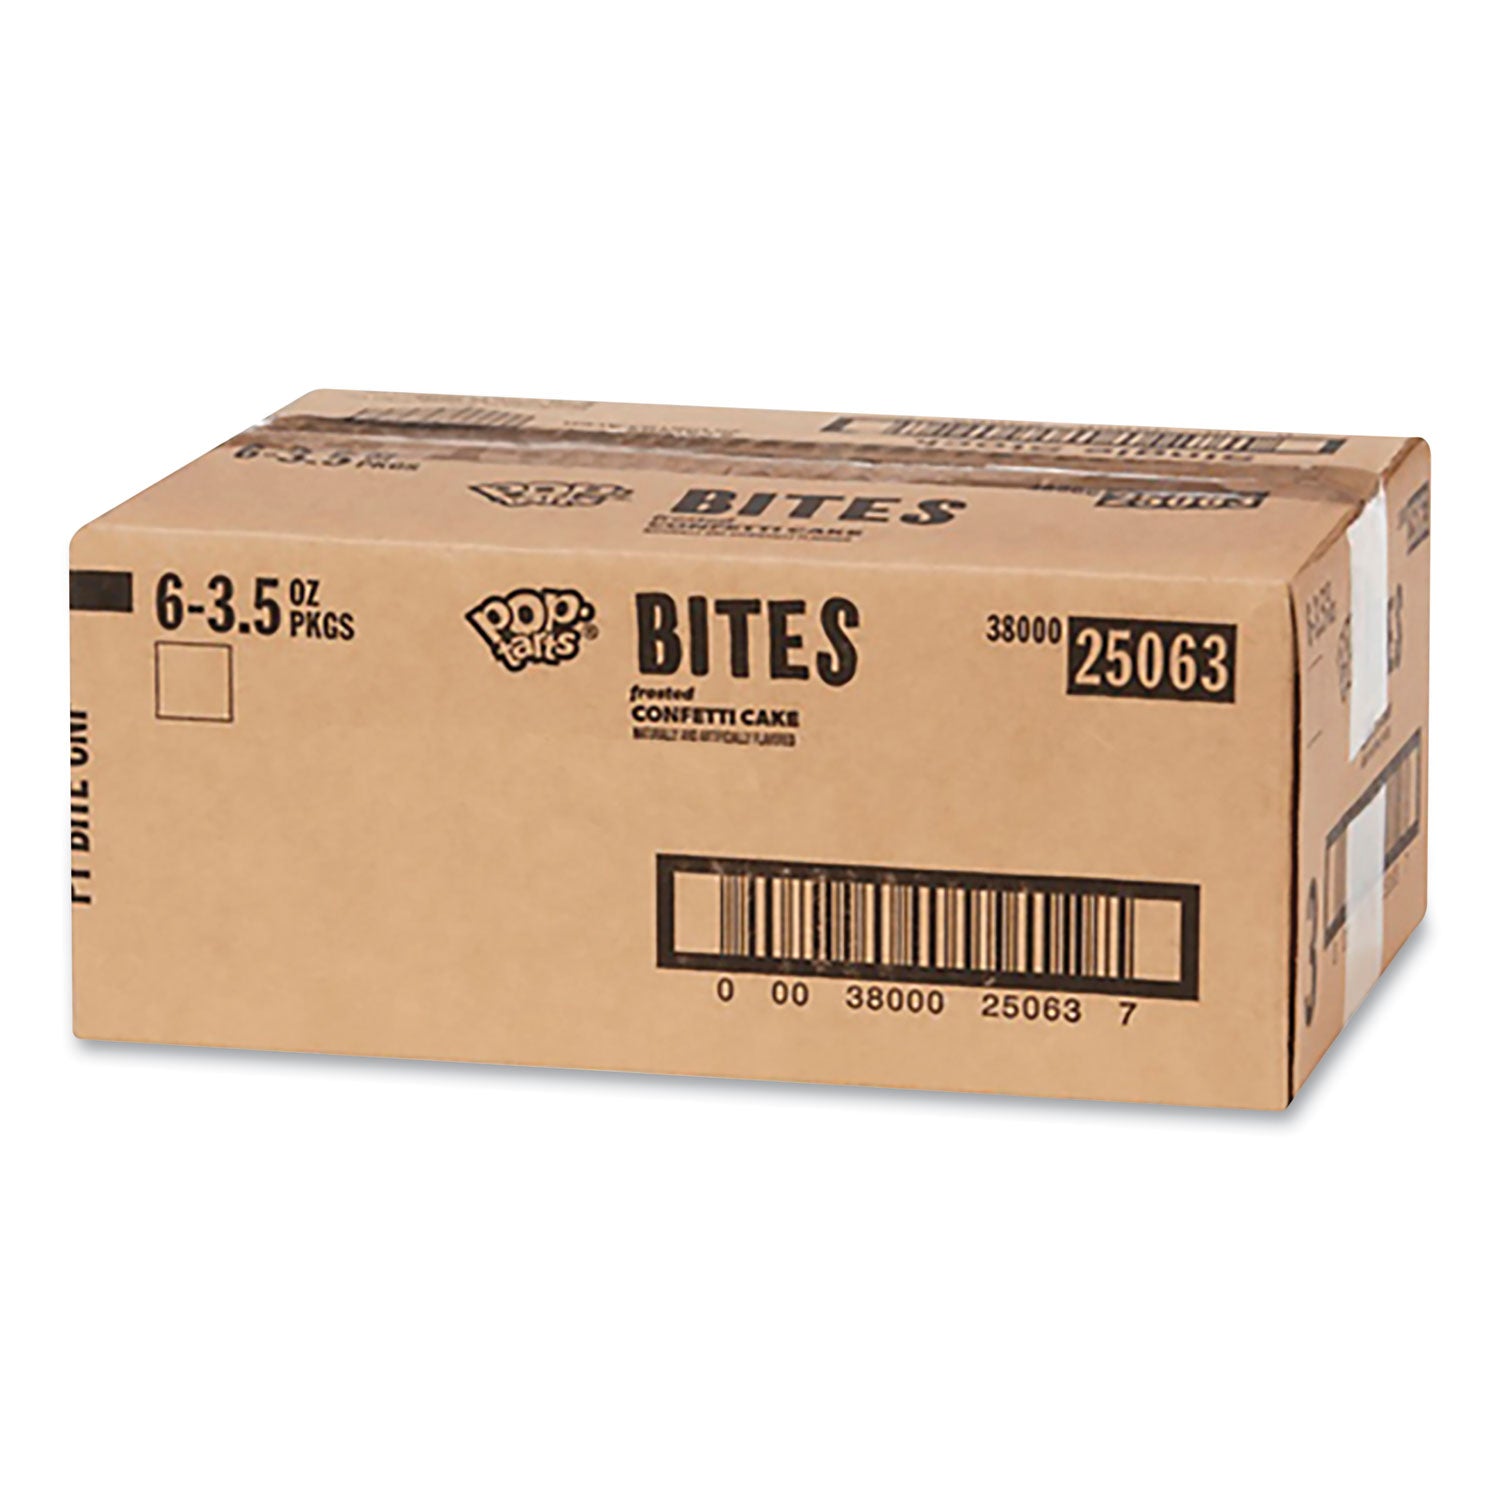 pop-tarts-bites-confetti-cake-35-oz-bag-6-carton_keb25063 - 7